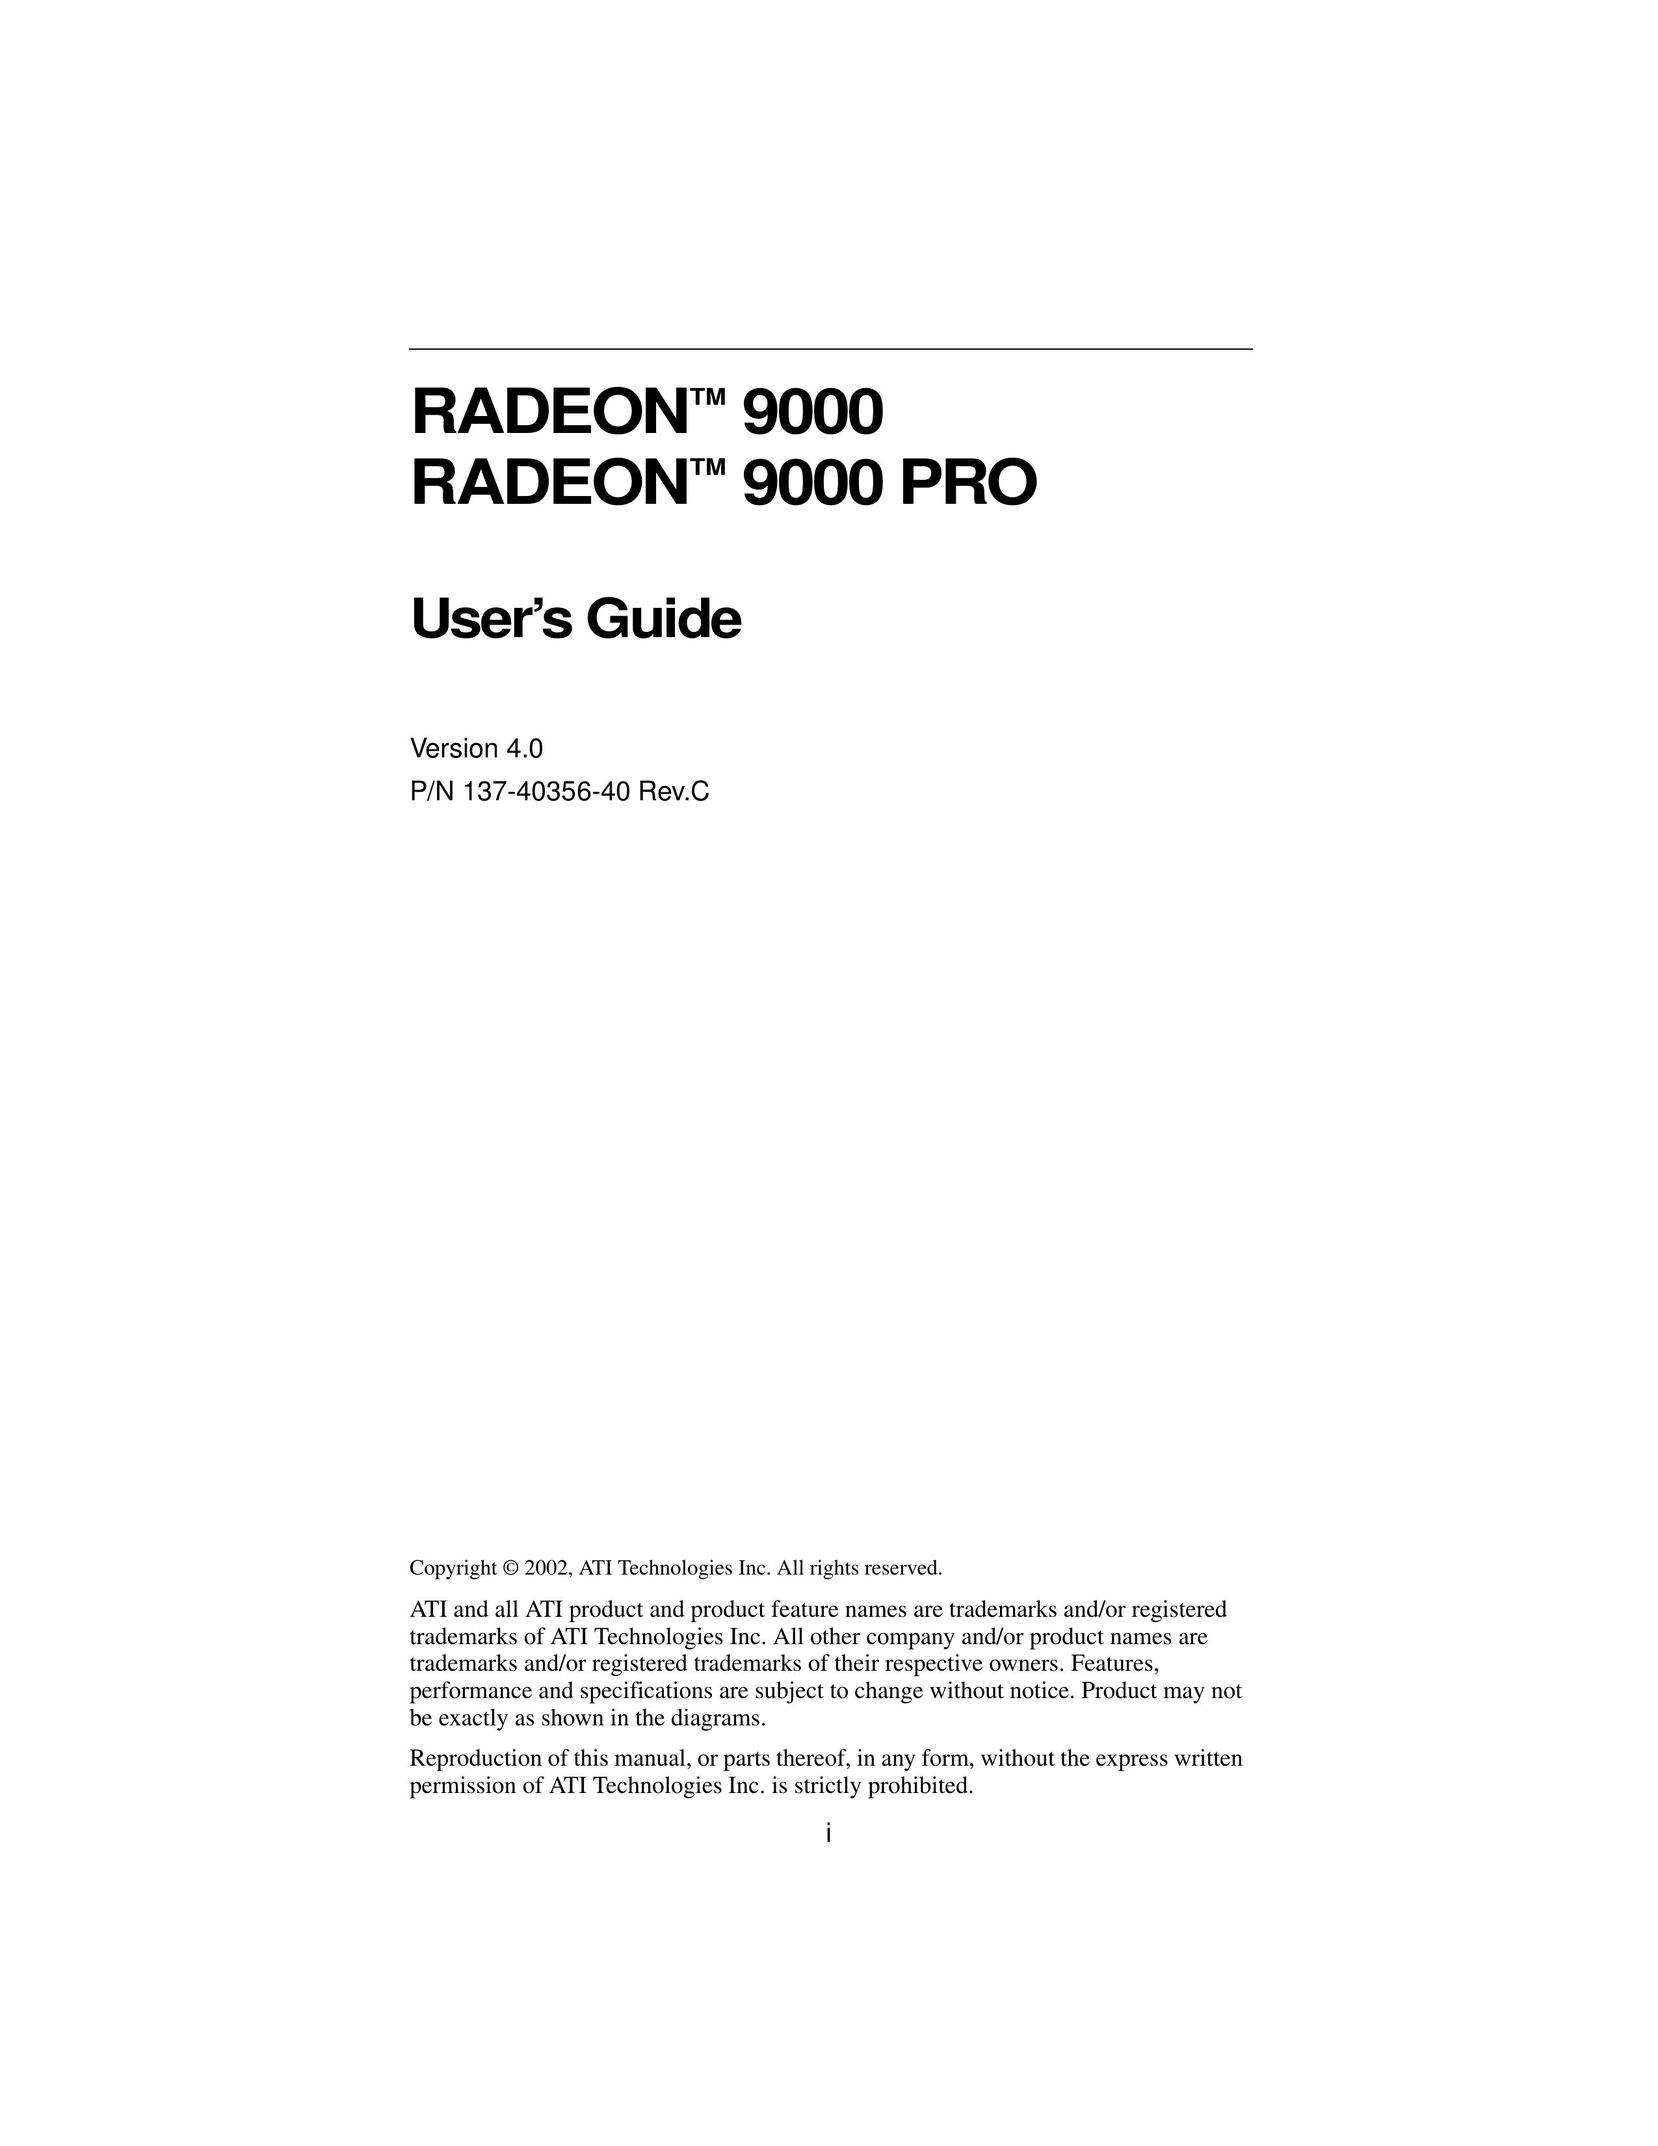 ATI Technologies 9000 PRO Computer Hardware User Manual